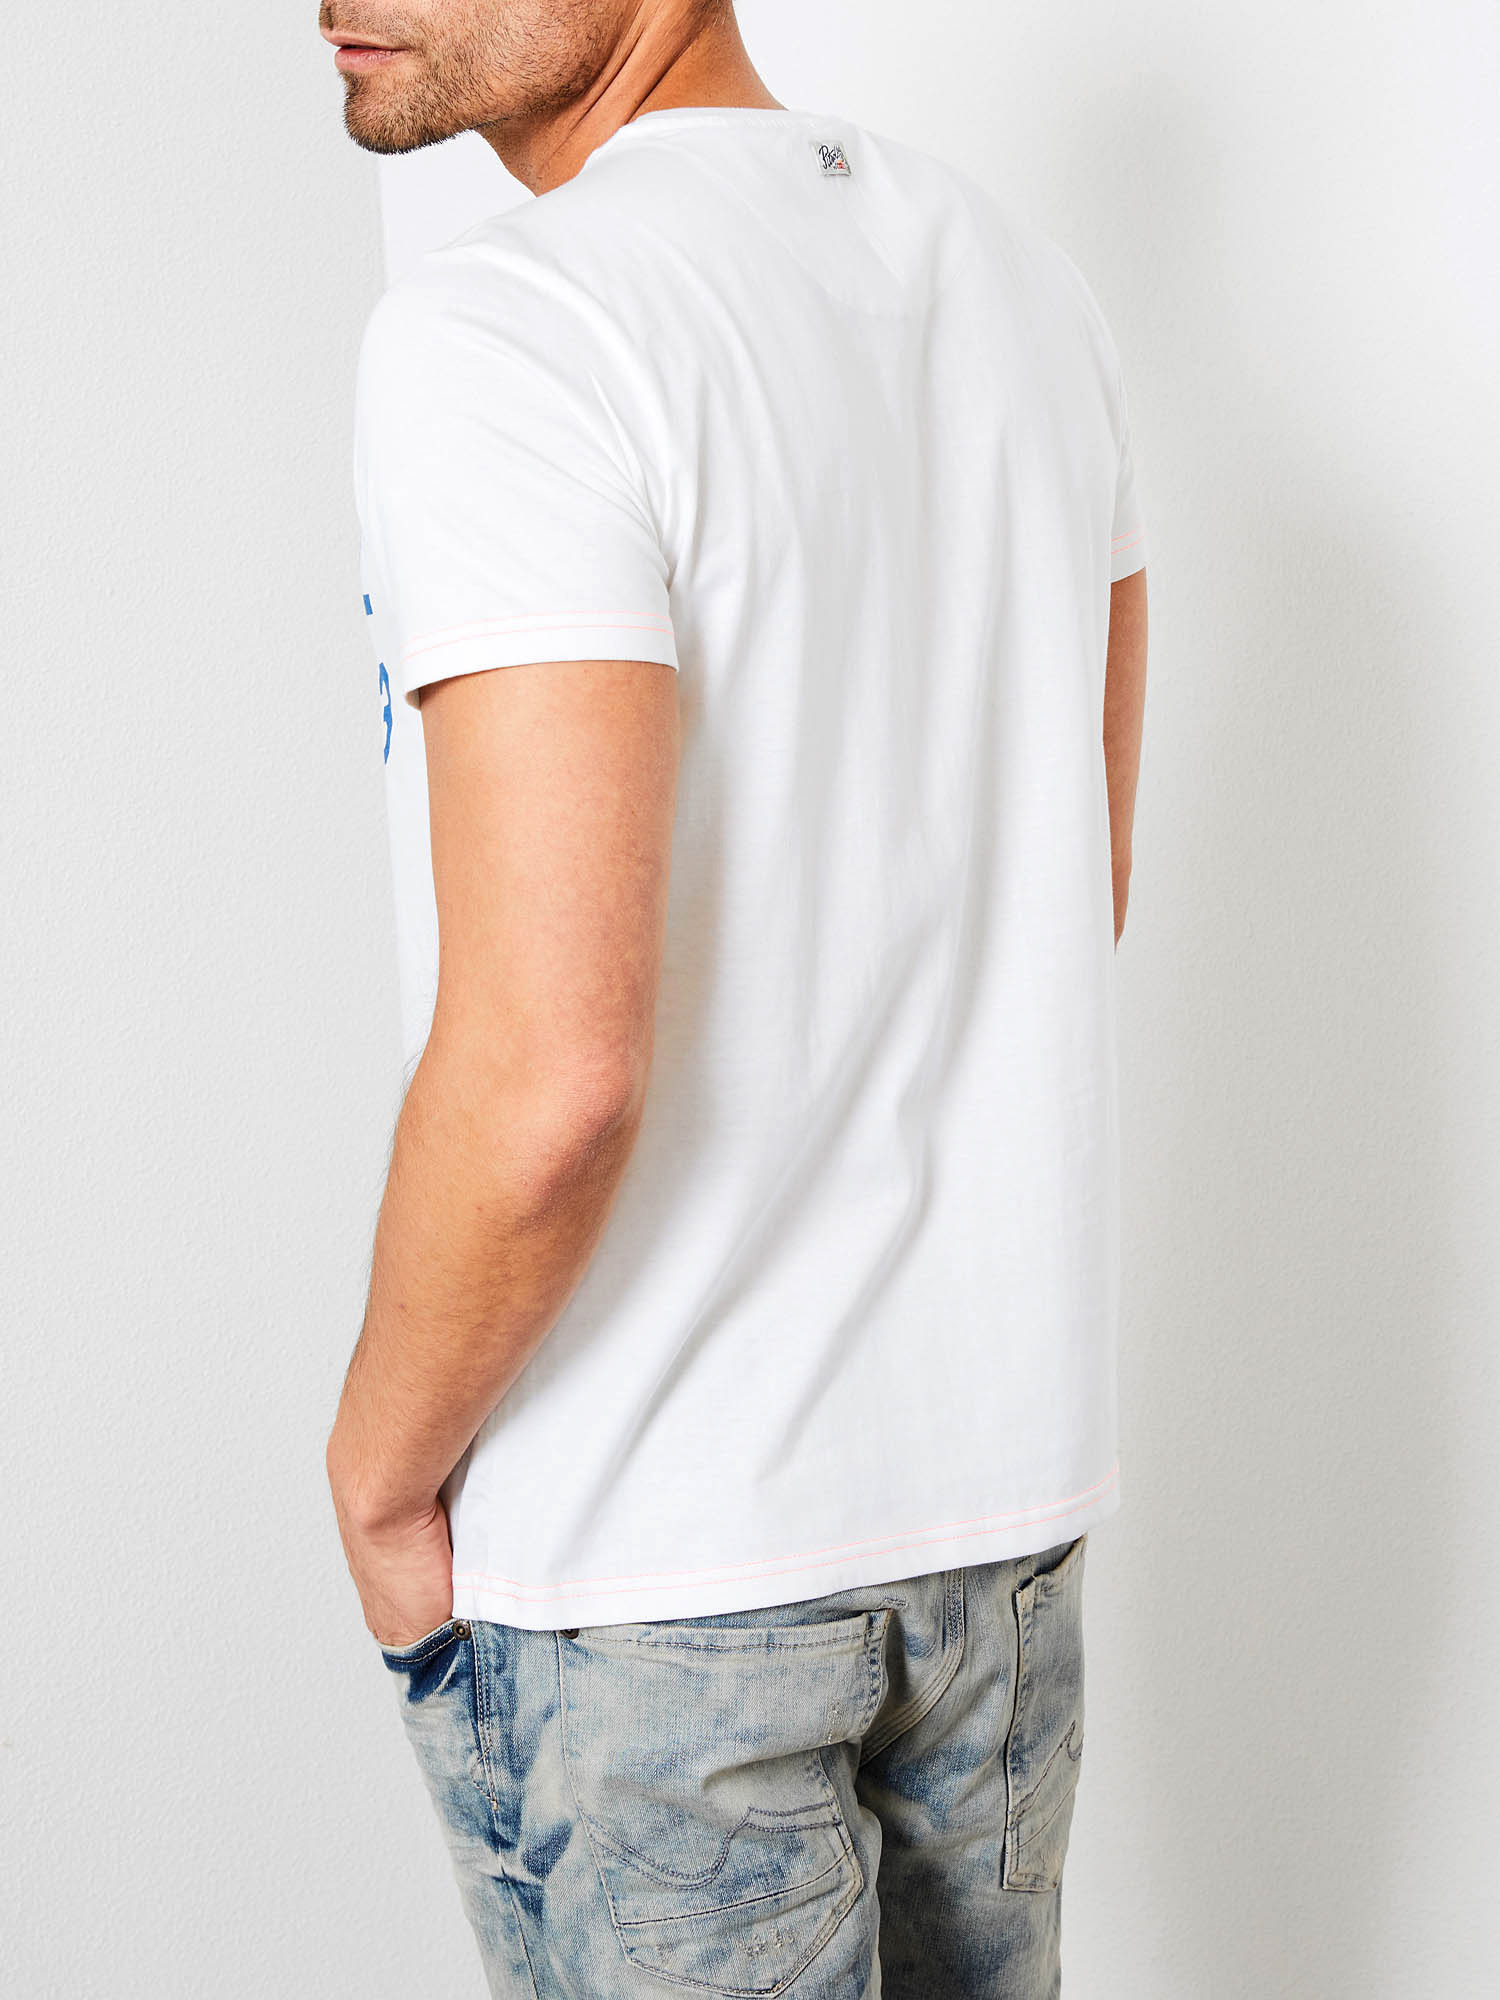 Petrol Industries Artwork T-shirt - J Menswear Style White Bright